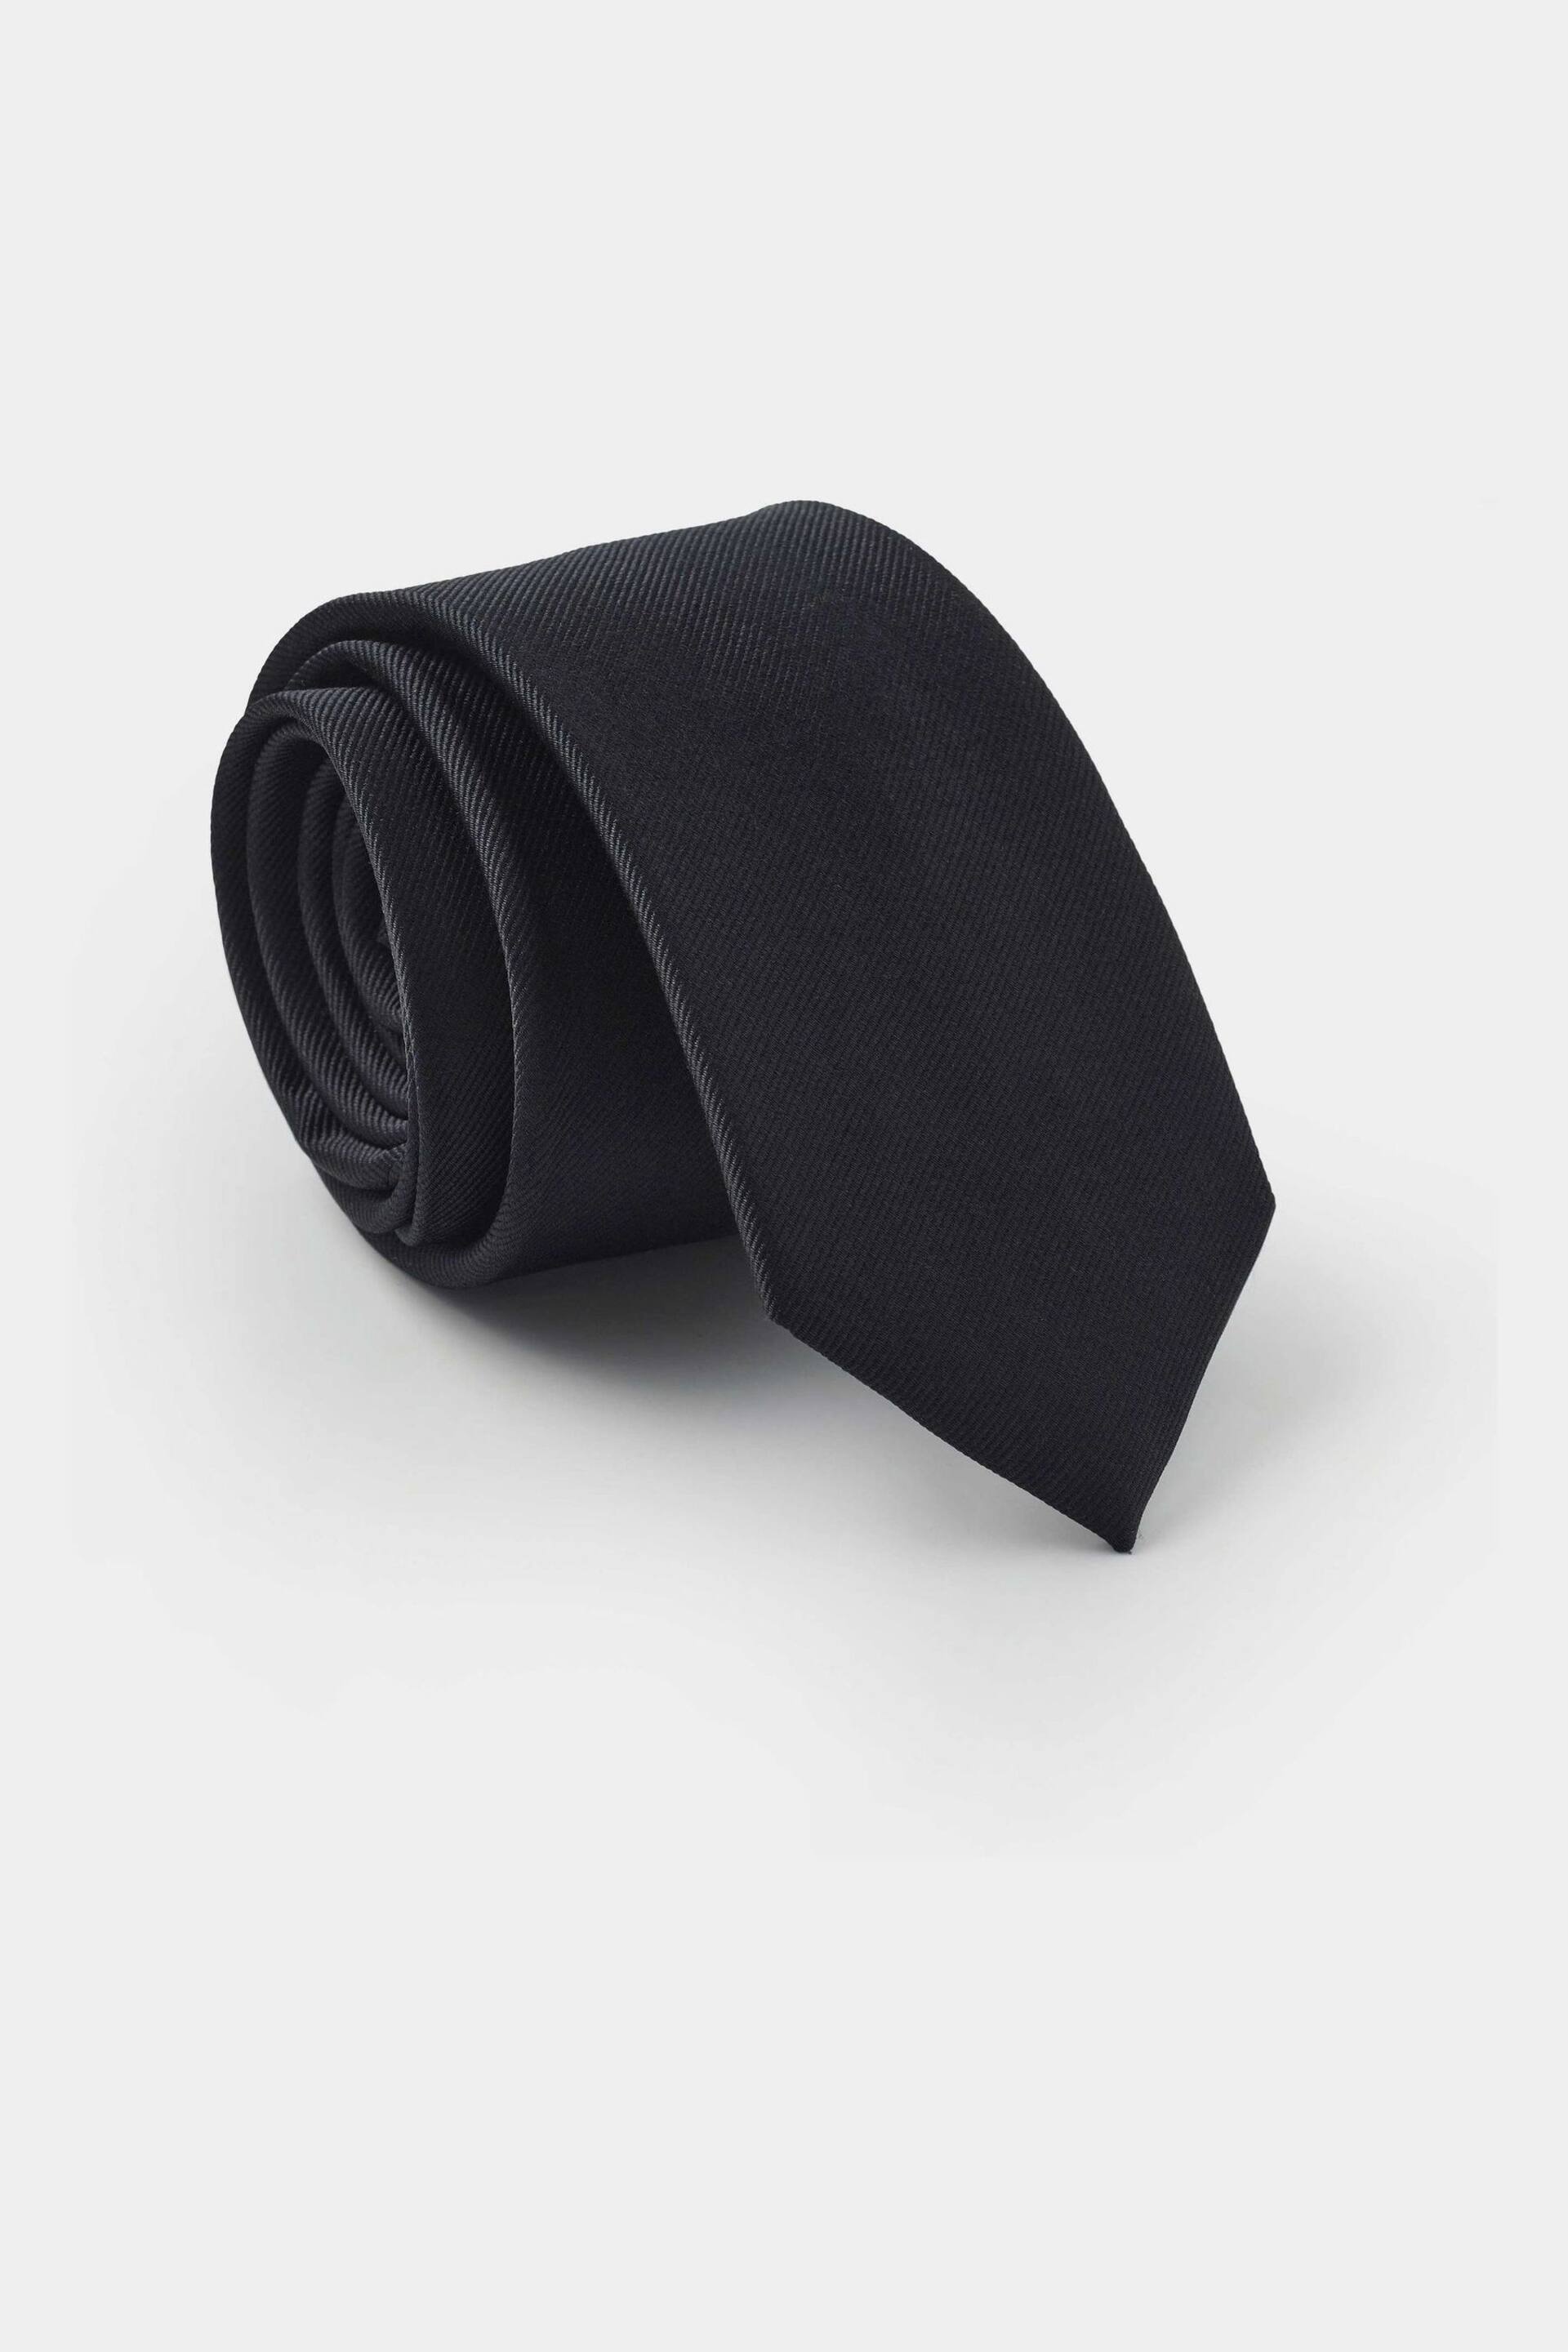 Savile Row Company Fine Twill Skinny Silk Black Tie - Image 1 of 2